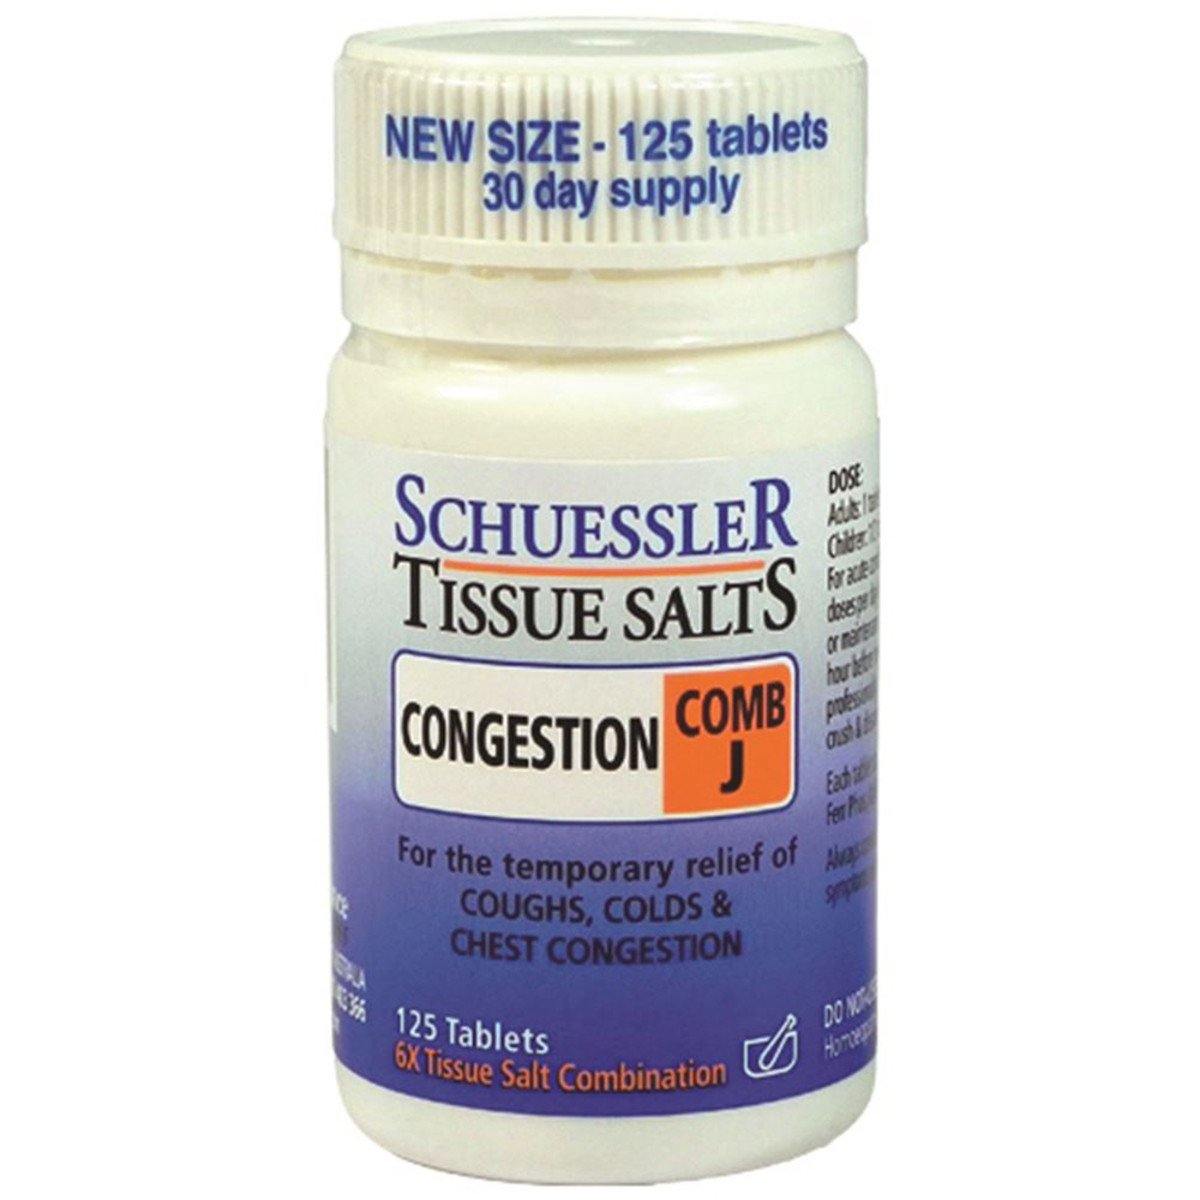 Martin & Pleasance Schuessler Tissue Salts Comb J (Congestion) 125 Tablets - QVM Vitamins™